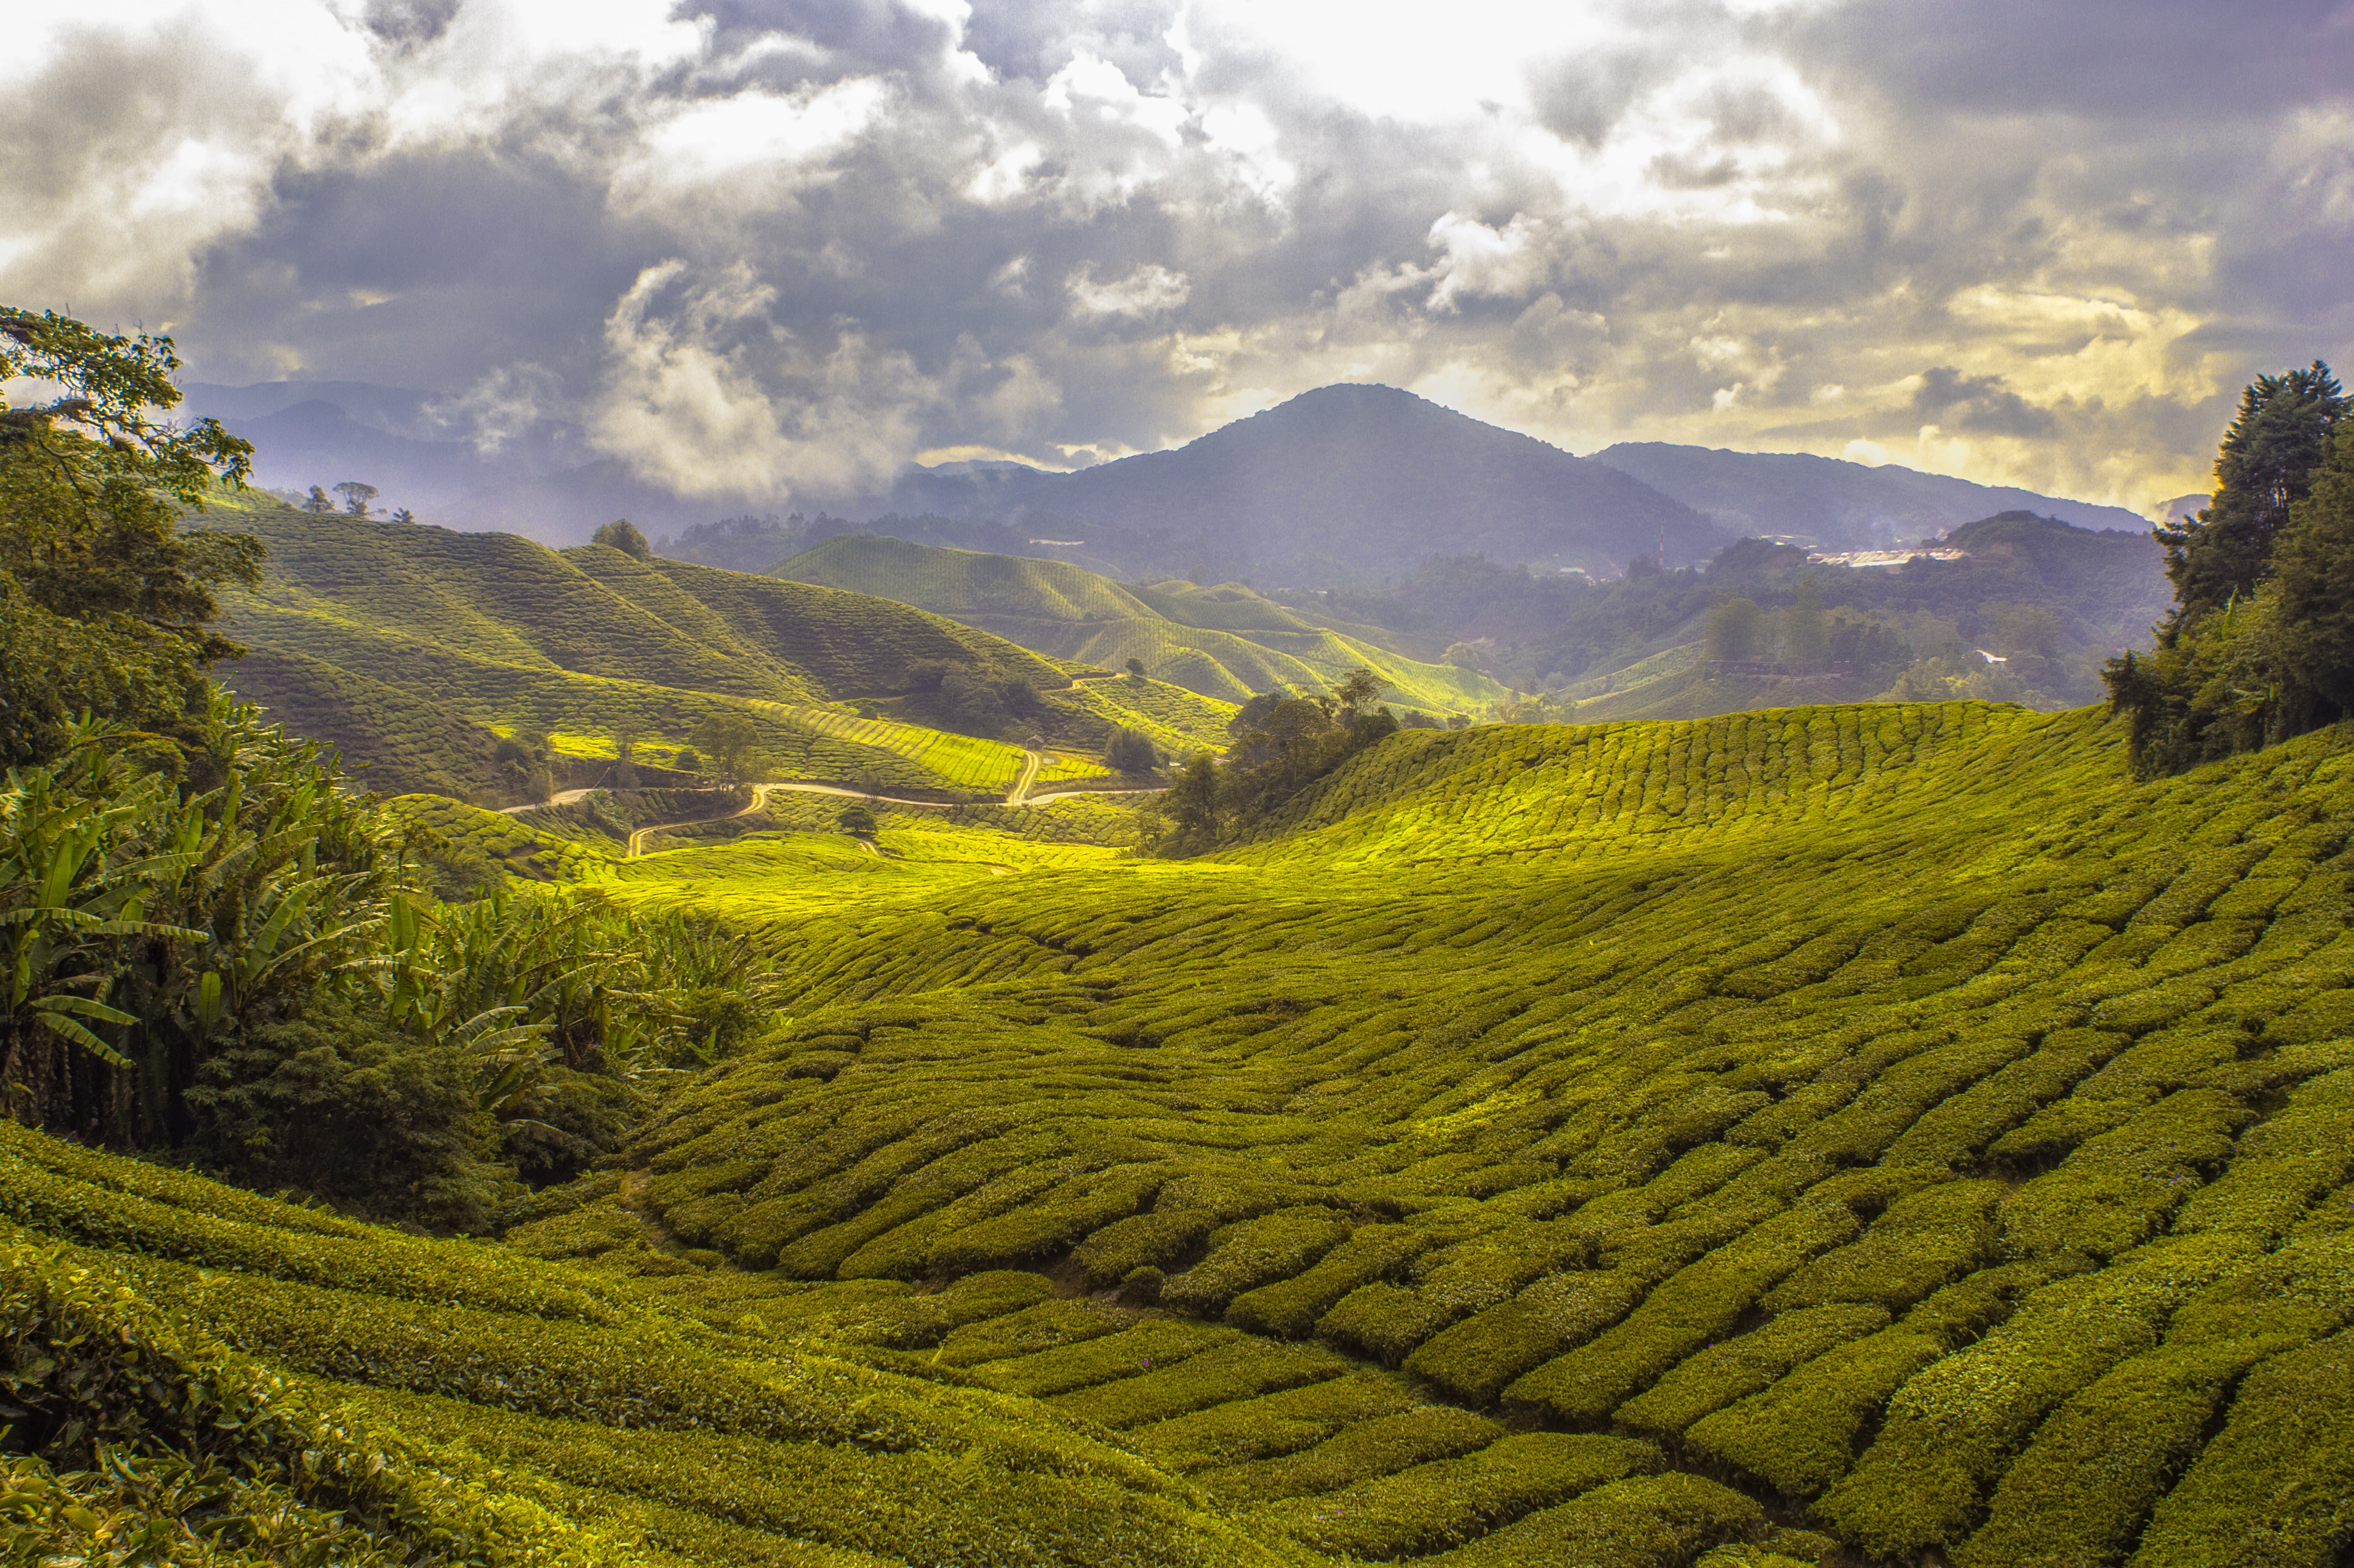 The Cameron Highlands in Sri Lanka are home to many tea plantations.